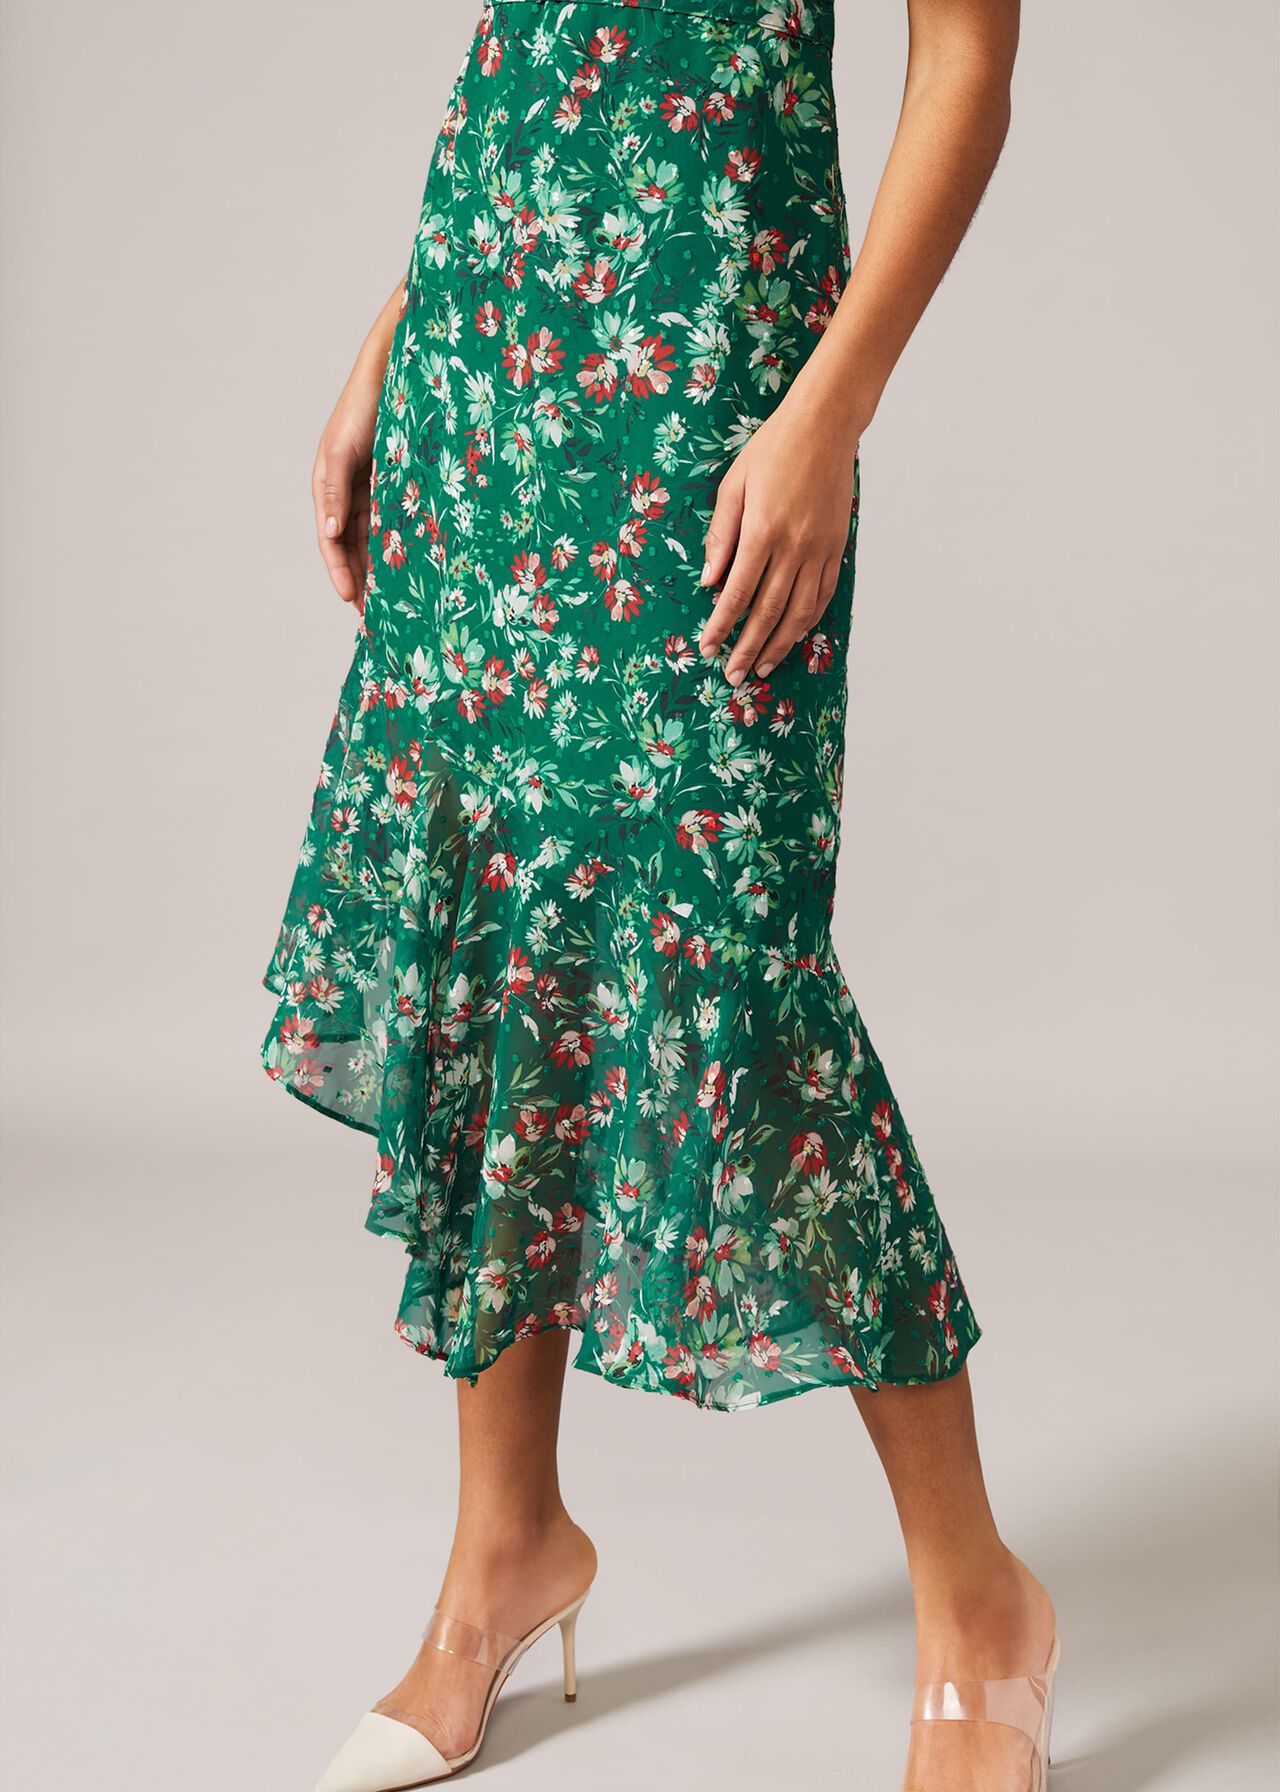 Coralee Textured Floral Dress